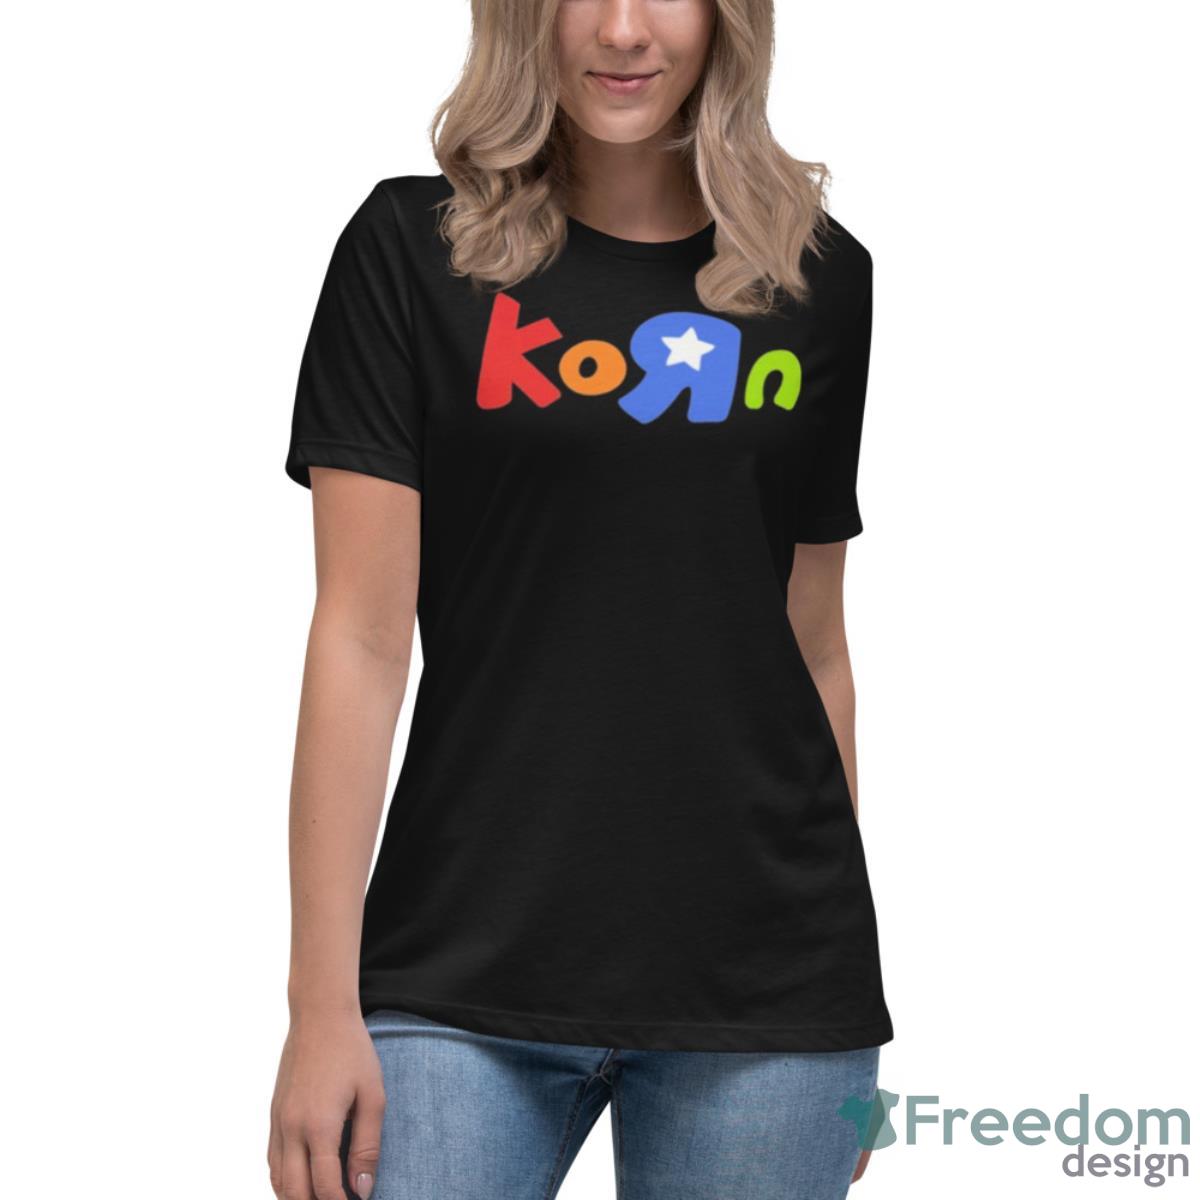 Cringeys Korn Shirt